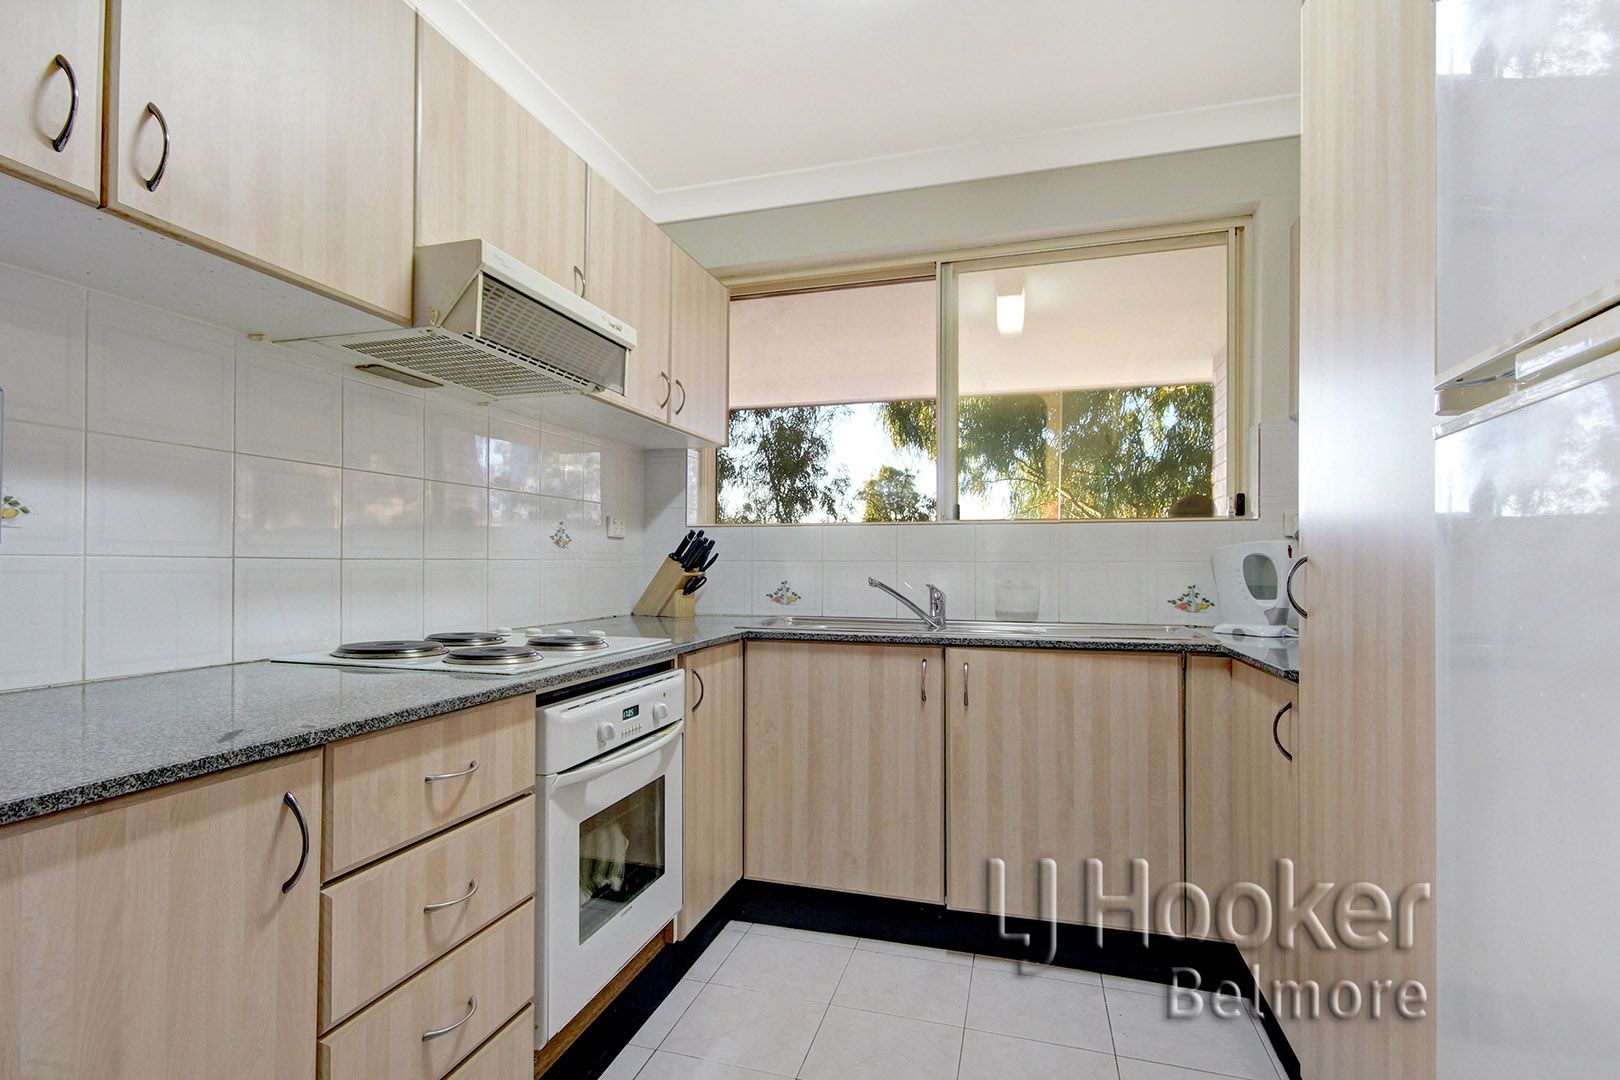 2 bedrooms Apartment / Unit / Flat in 37/101-105 Bridge Road BELMORE NSW, 2192